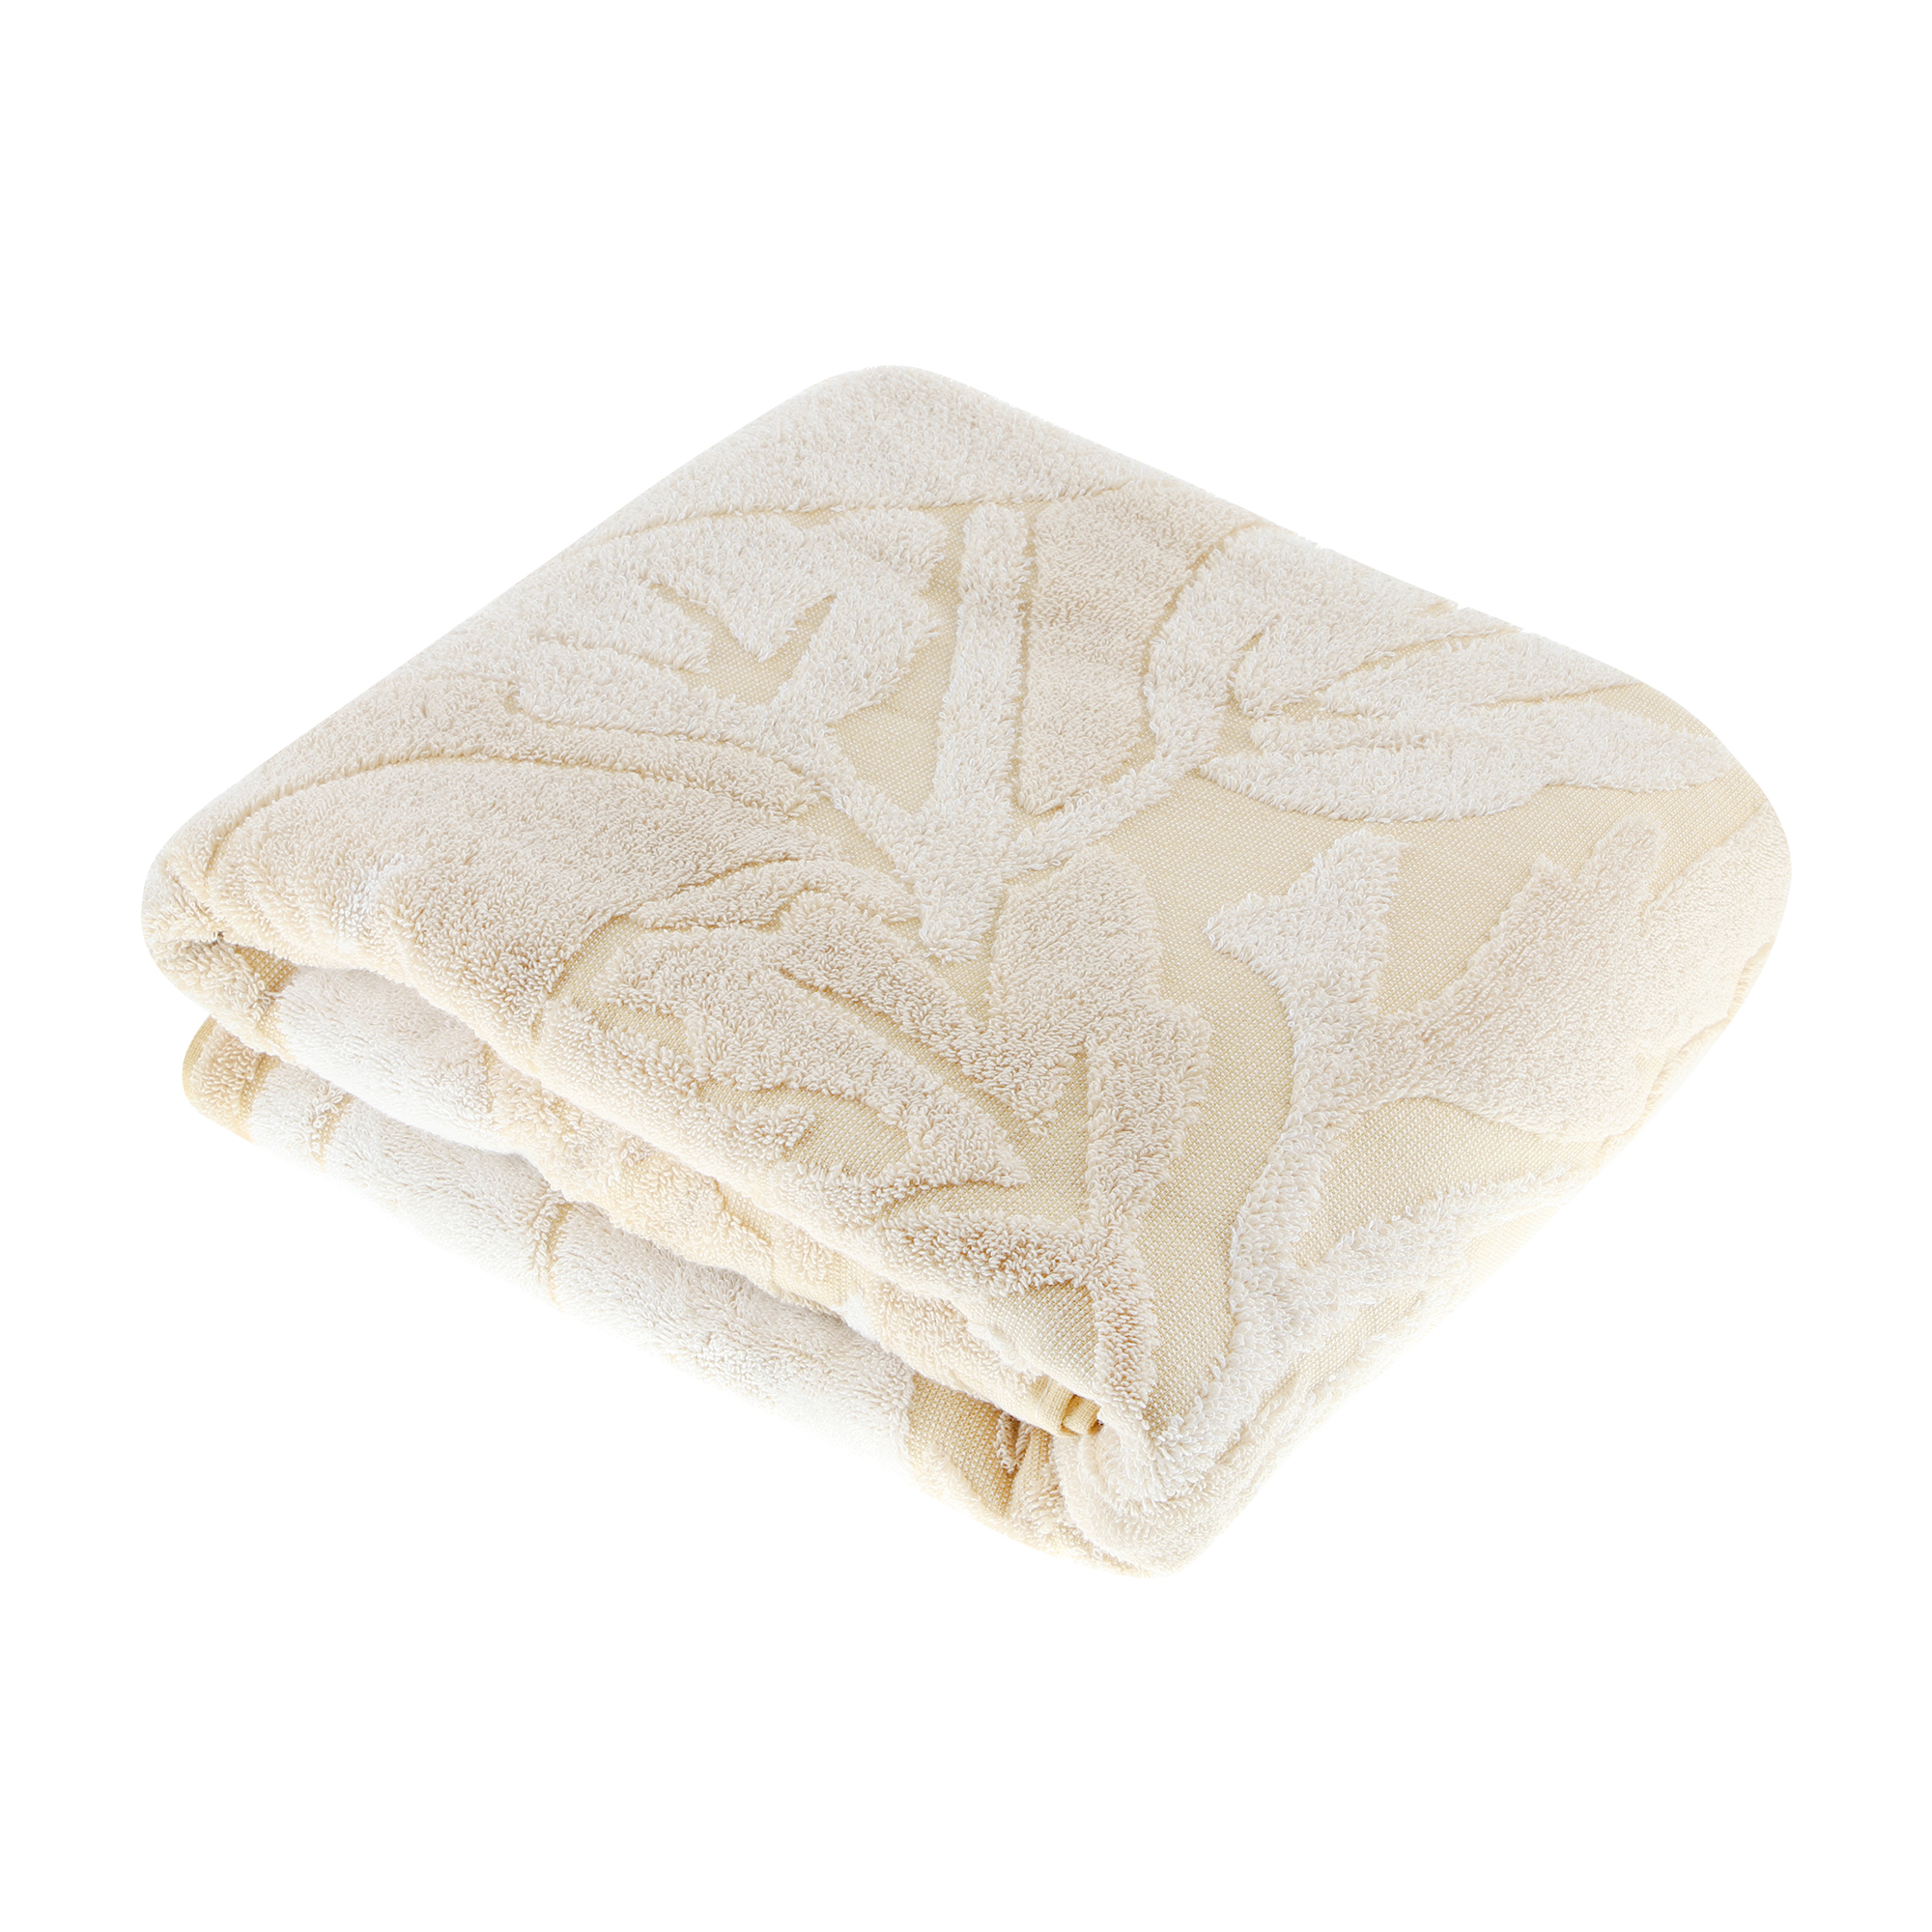 Полотенце махровое Cleanelly Форэста 100х150 бело-горчичное полотенце togas пуатье золотистый 100х150